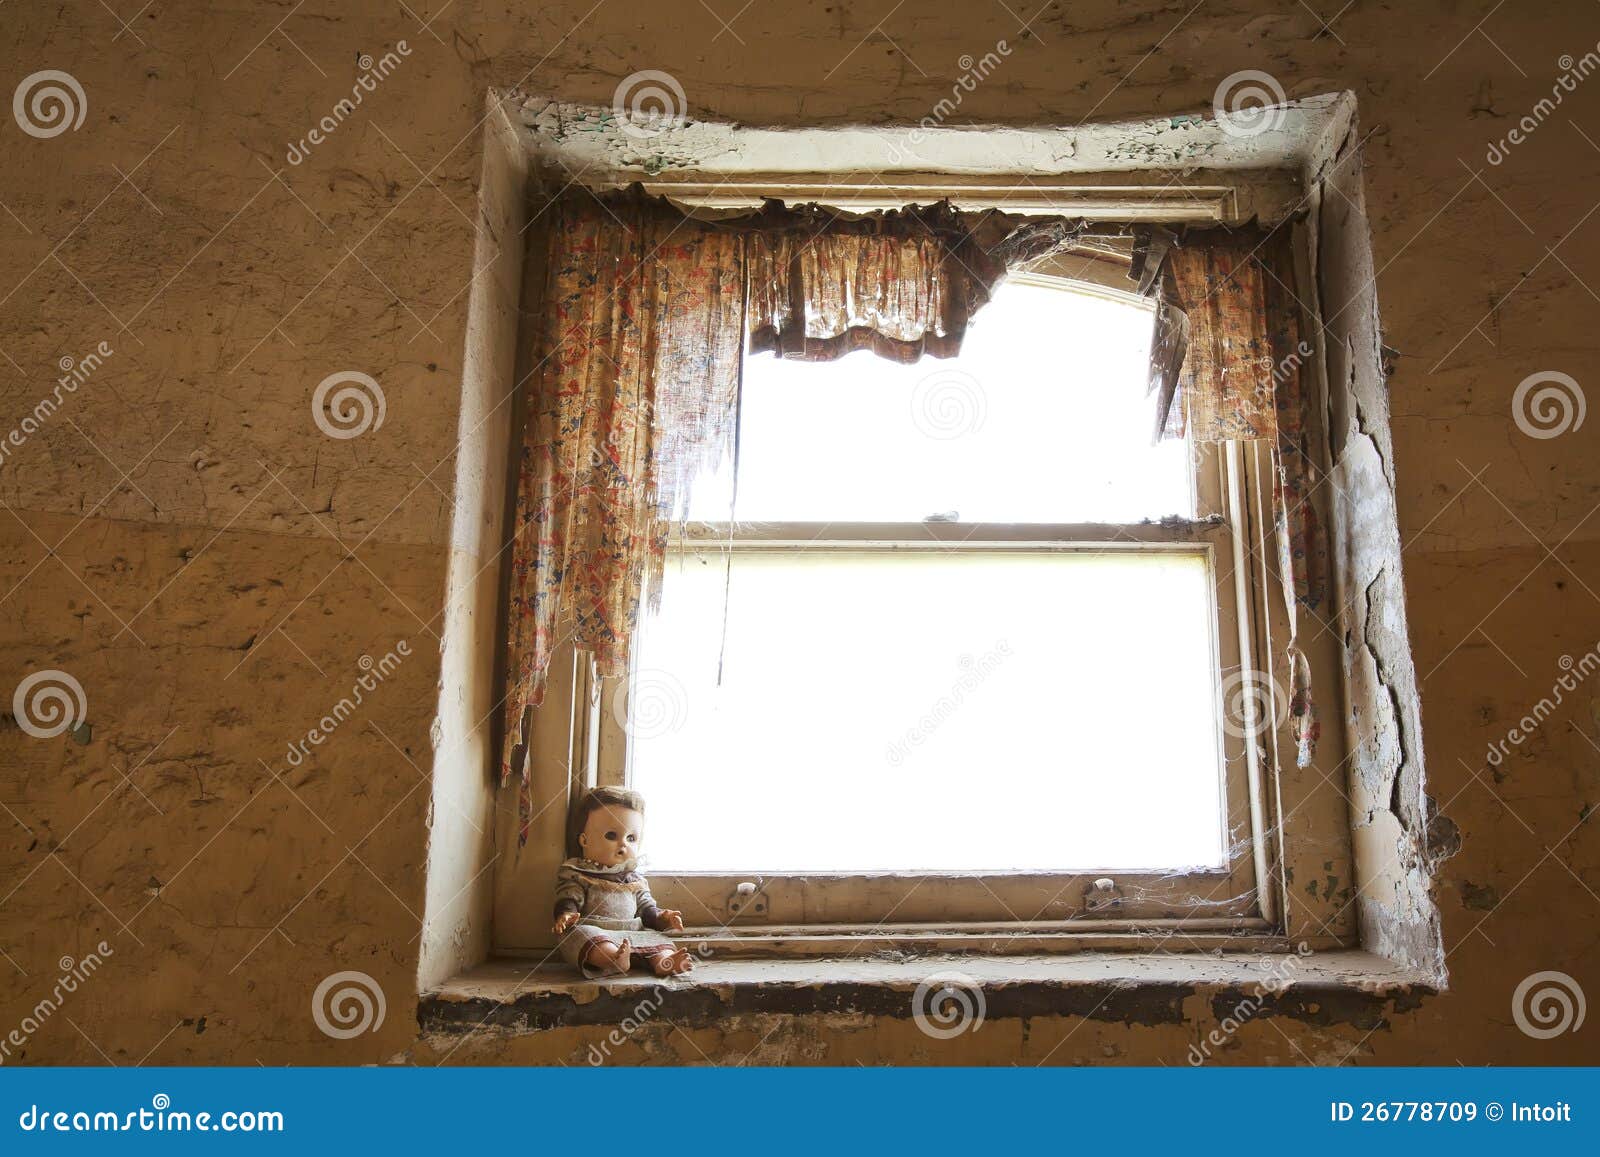 window sill clipart - photo #44